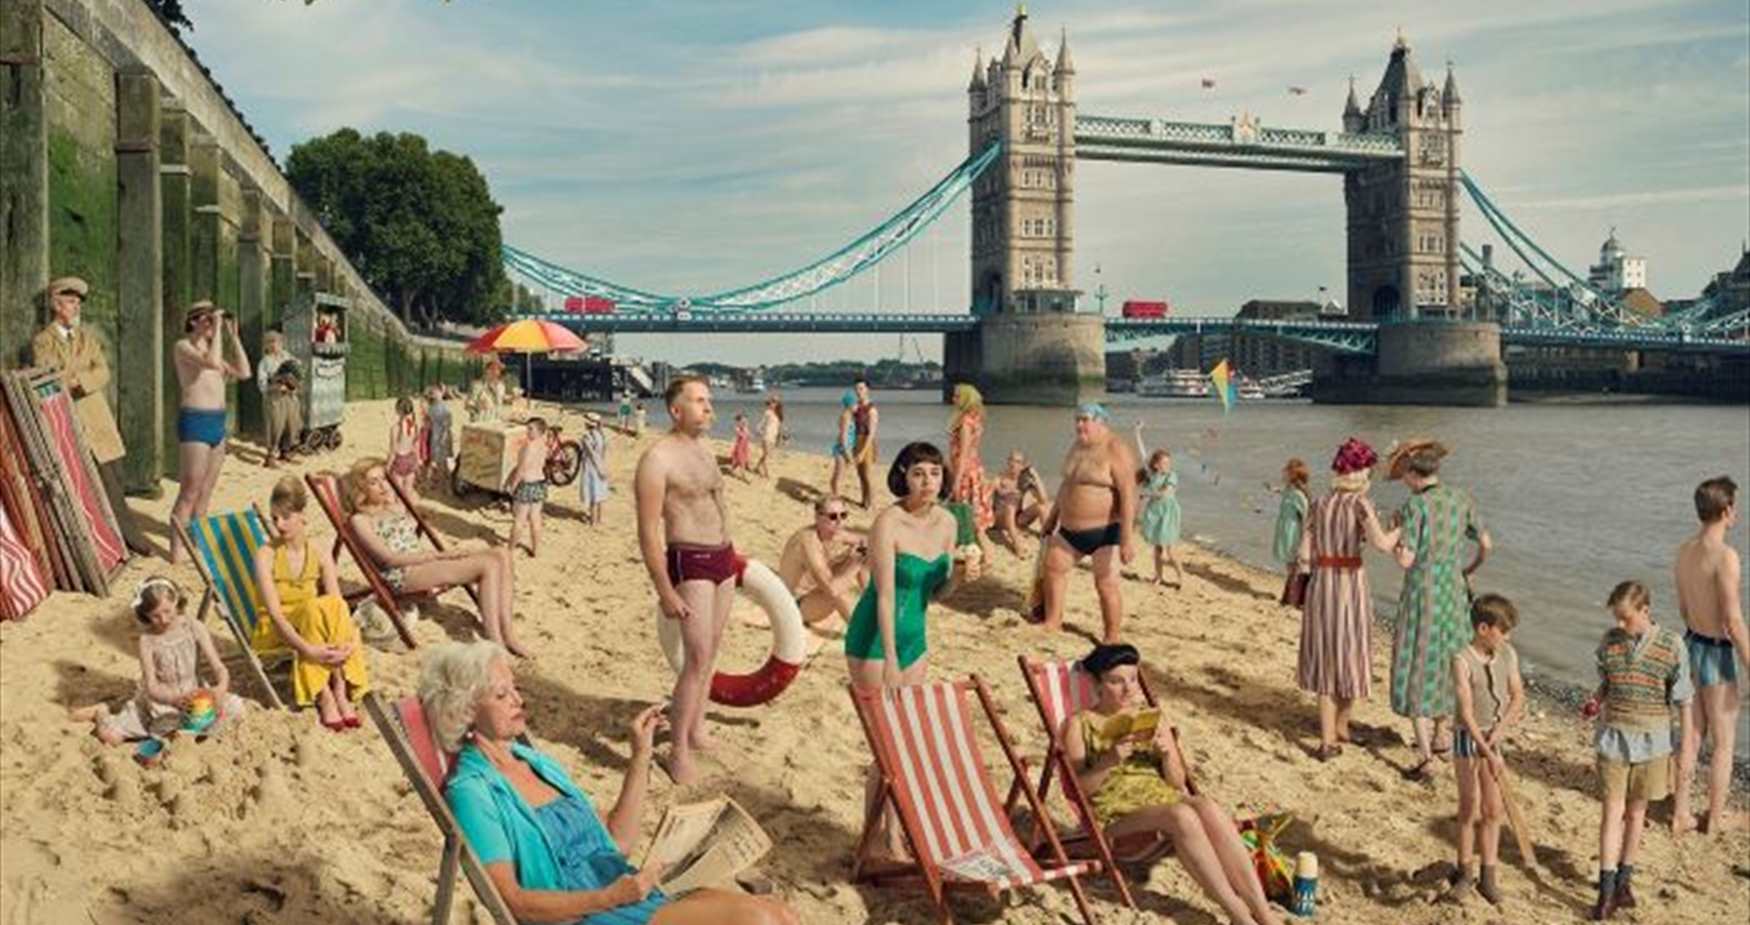 Bathing by Tower Bridge, River Thames 2018  Copyright Julia Fullerton-Batten|